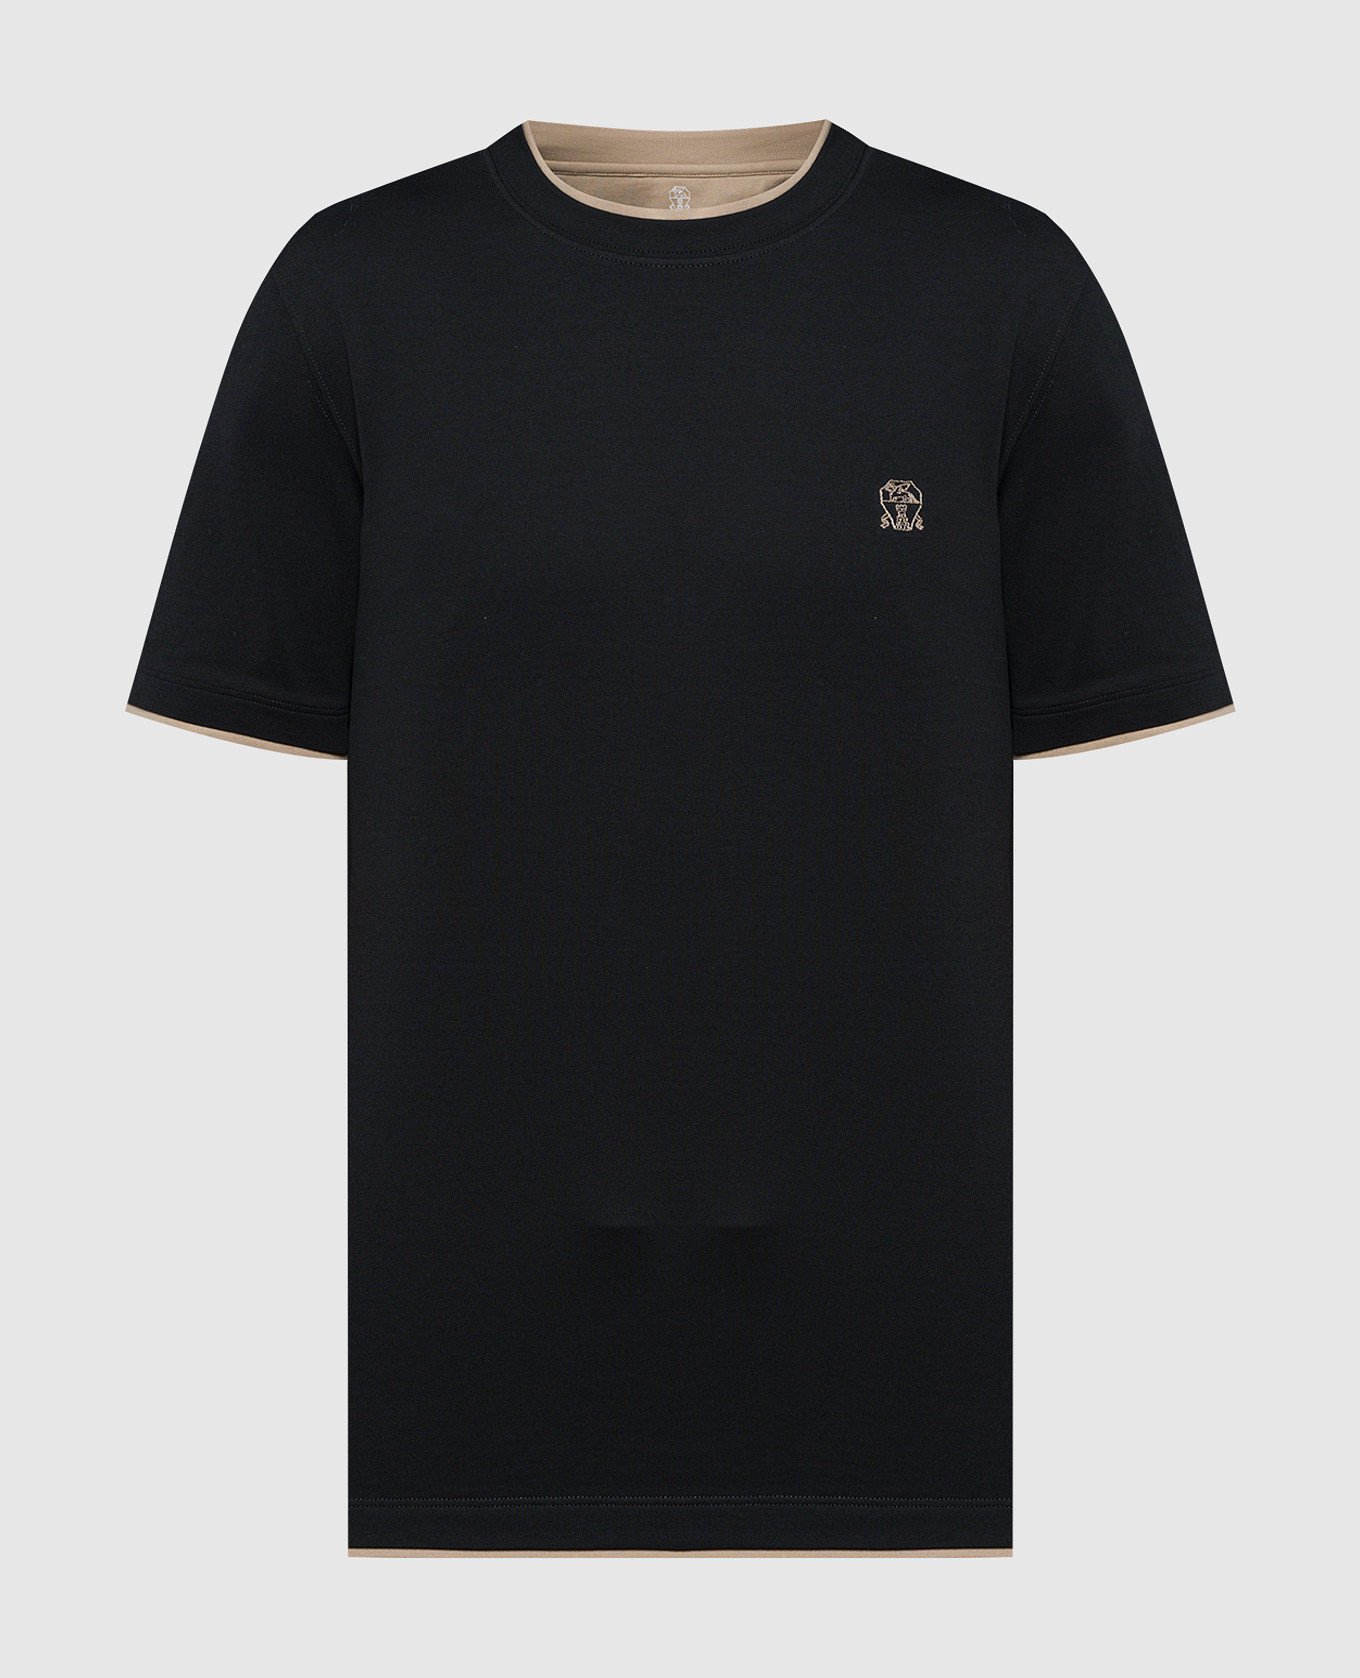 Black t-shirt with embroidered logo emblem